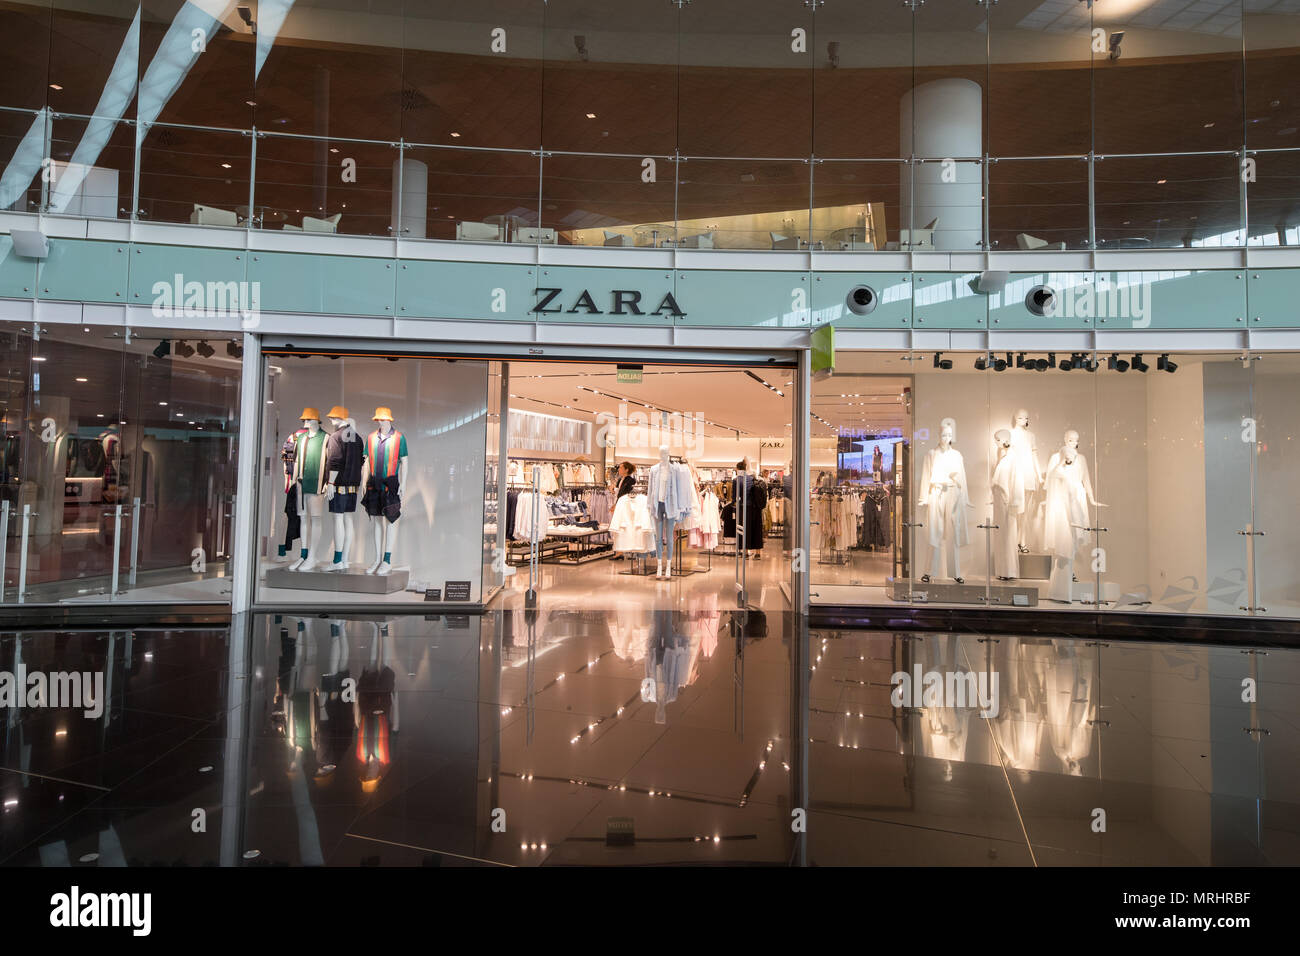 Barcelona airport, Spain ZARA store business Stock Photo - Alamy